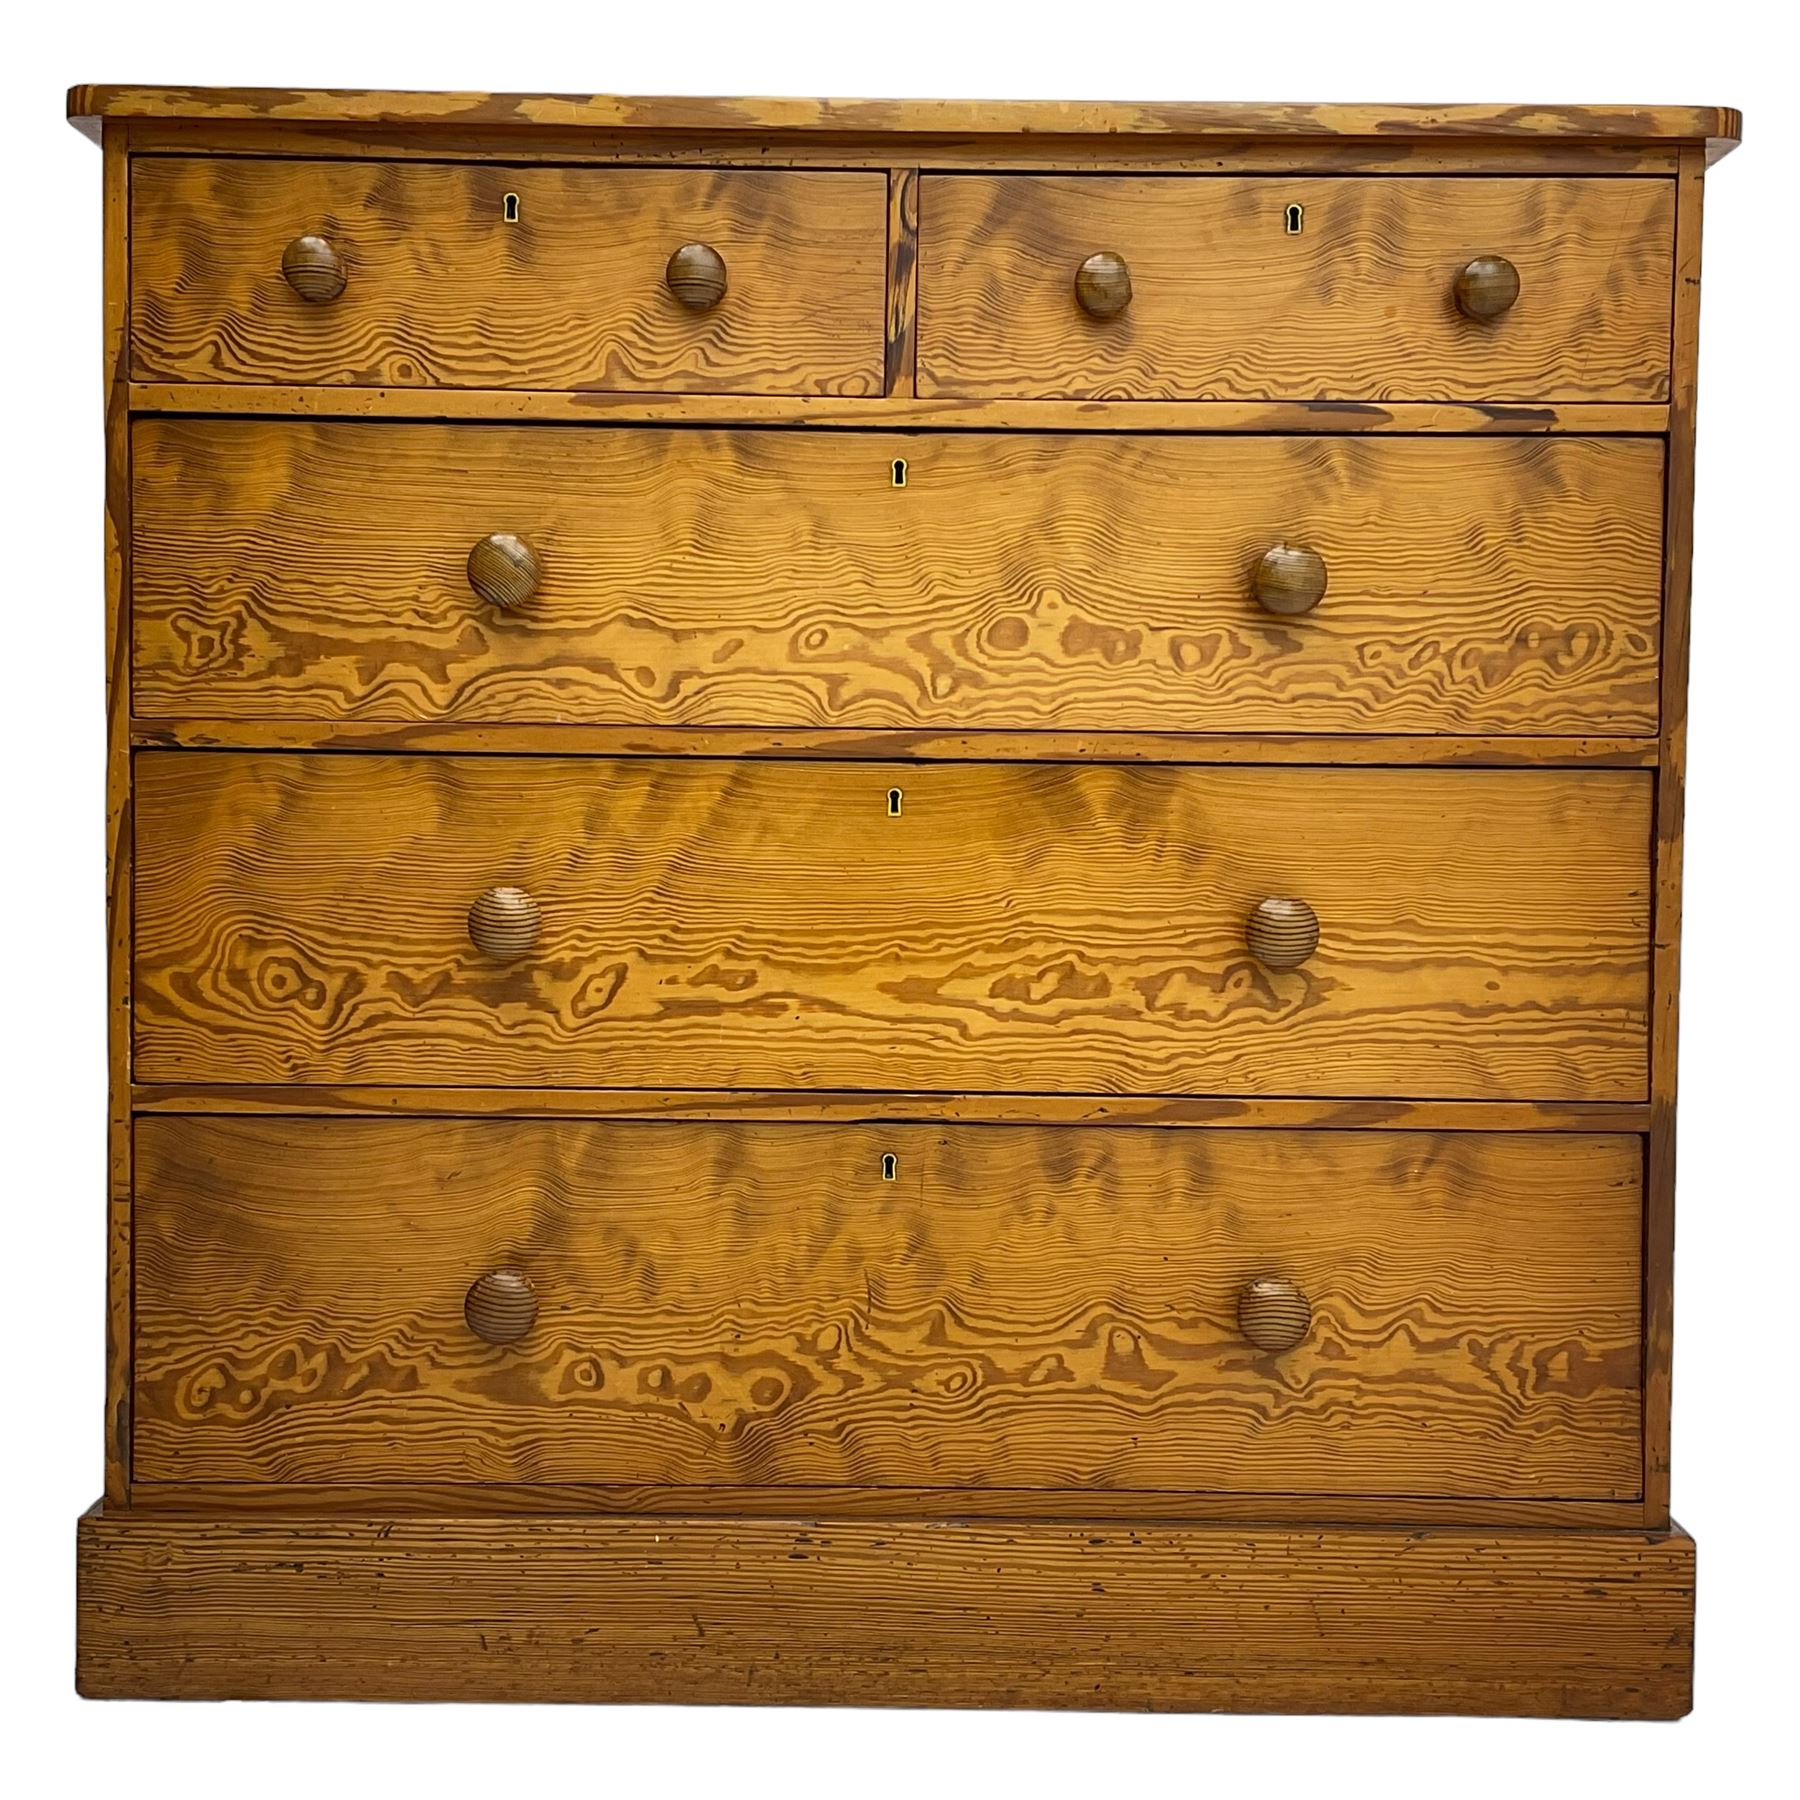 Victorian pitch pine chest